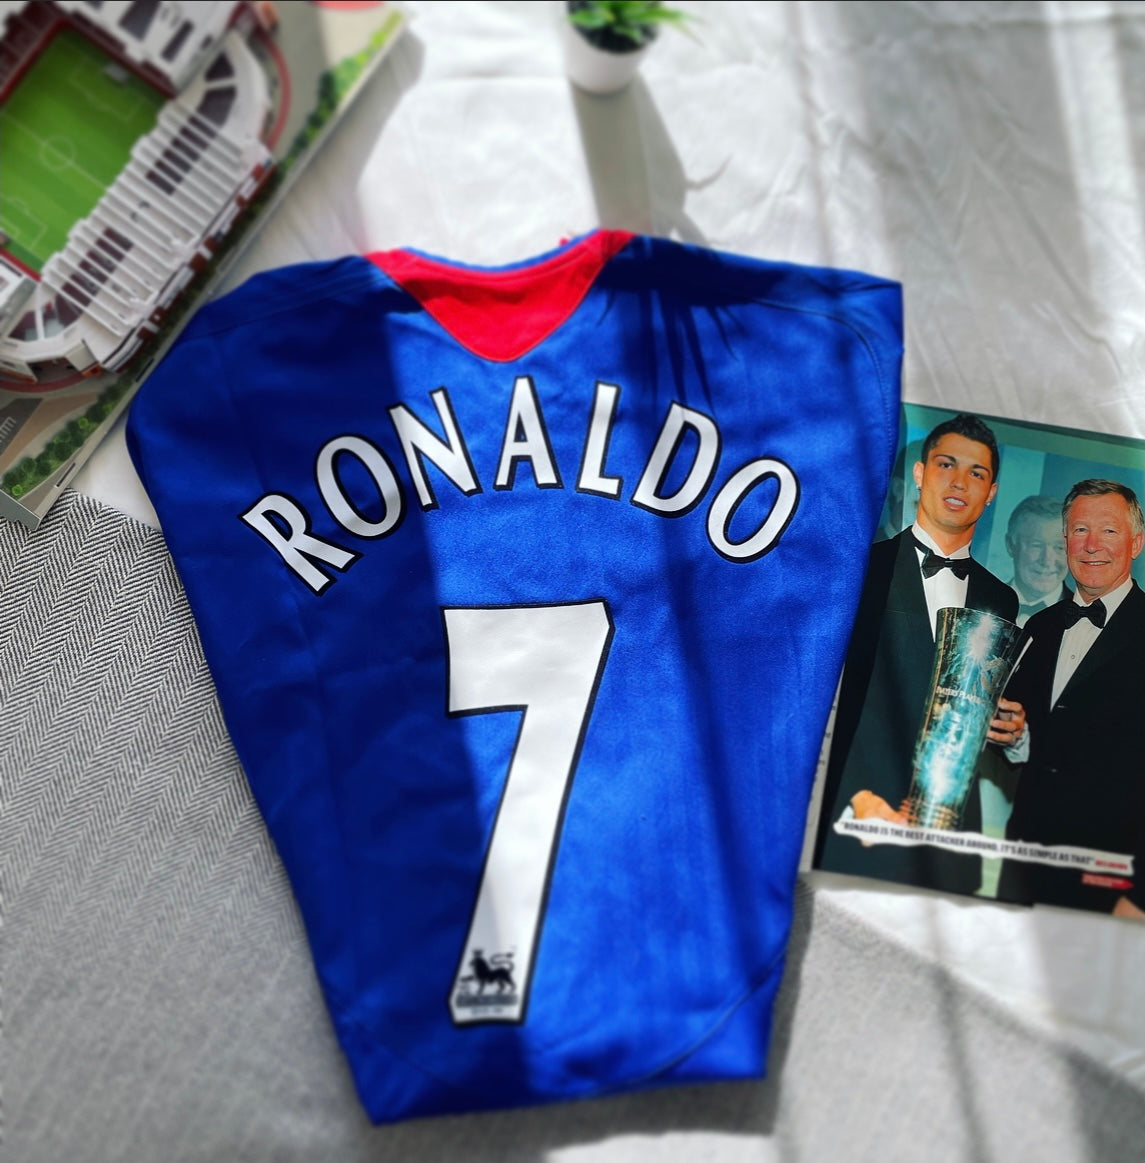 ronaldo blue manchester united jersey